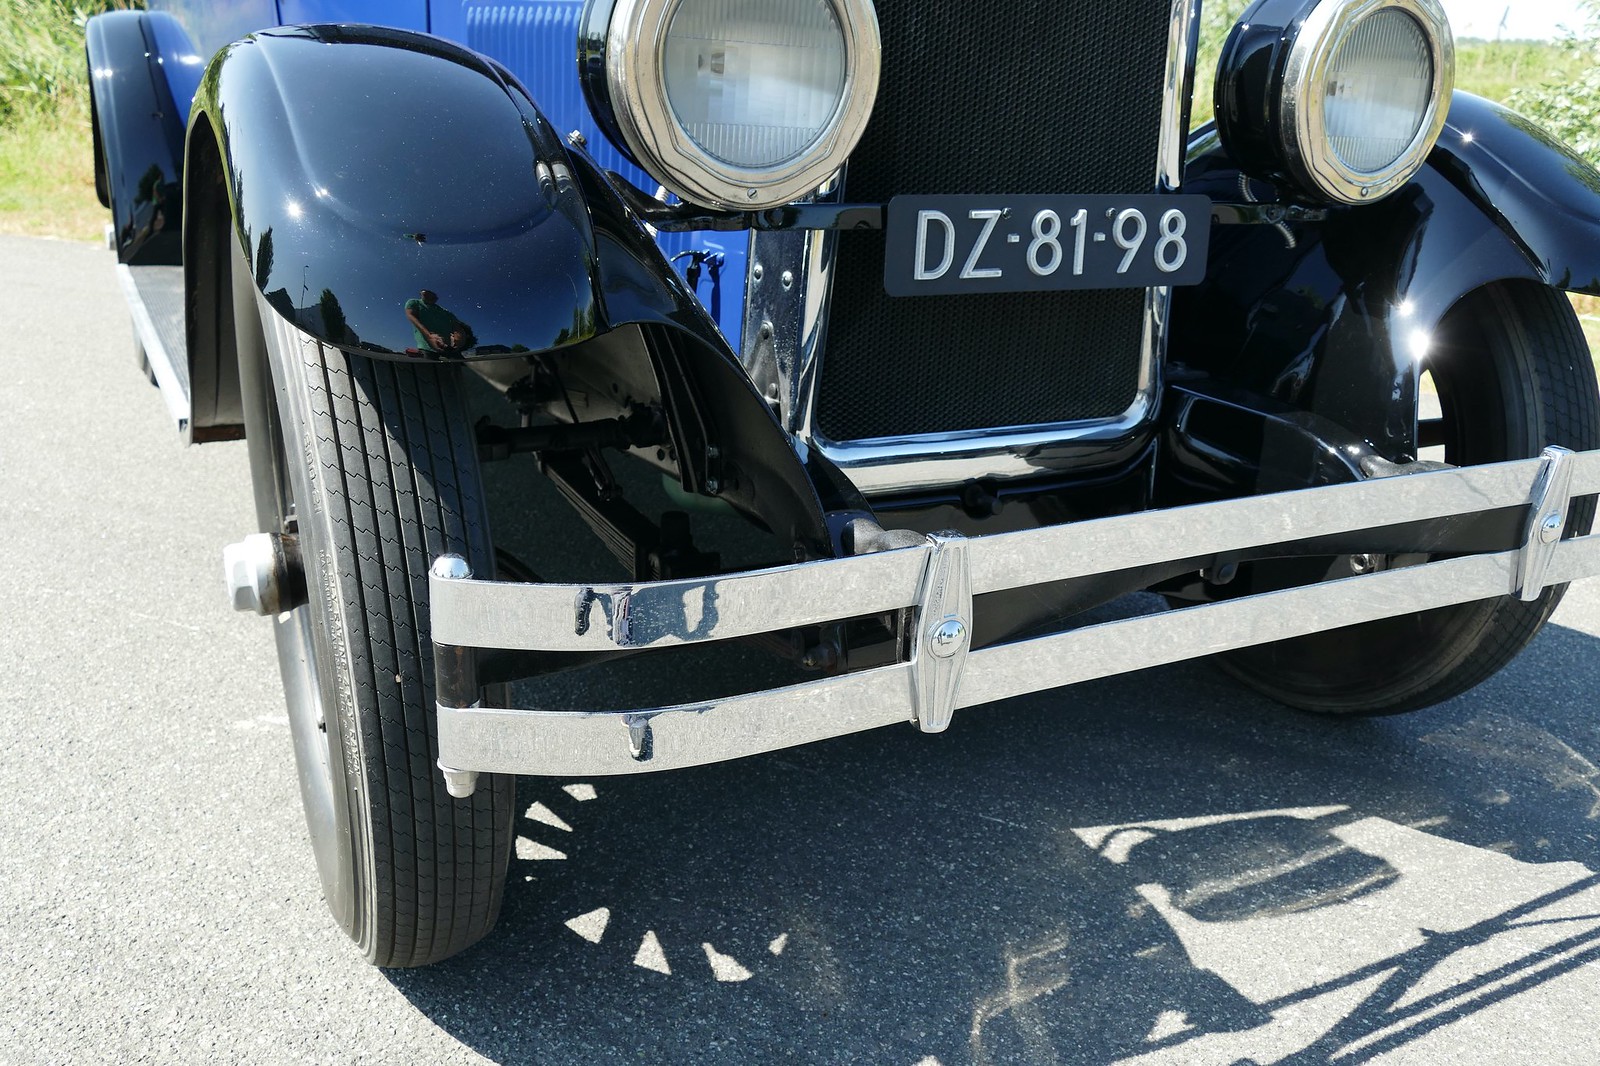 Buick Standard Six Sedan 1927